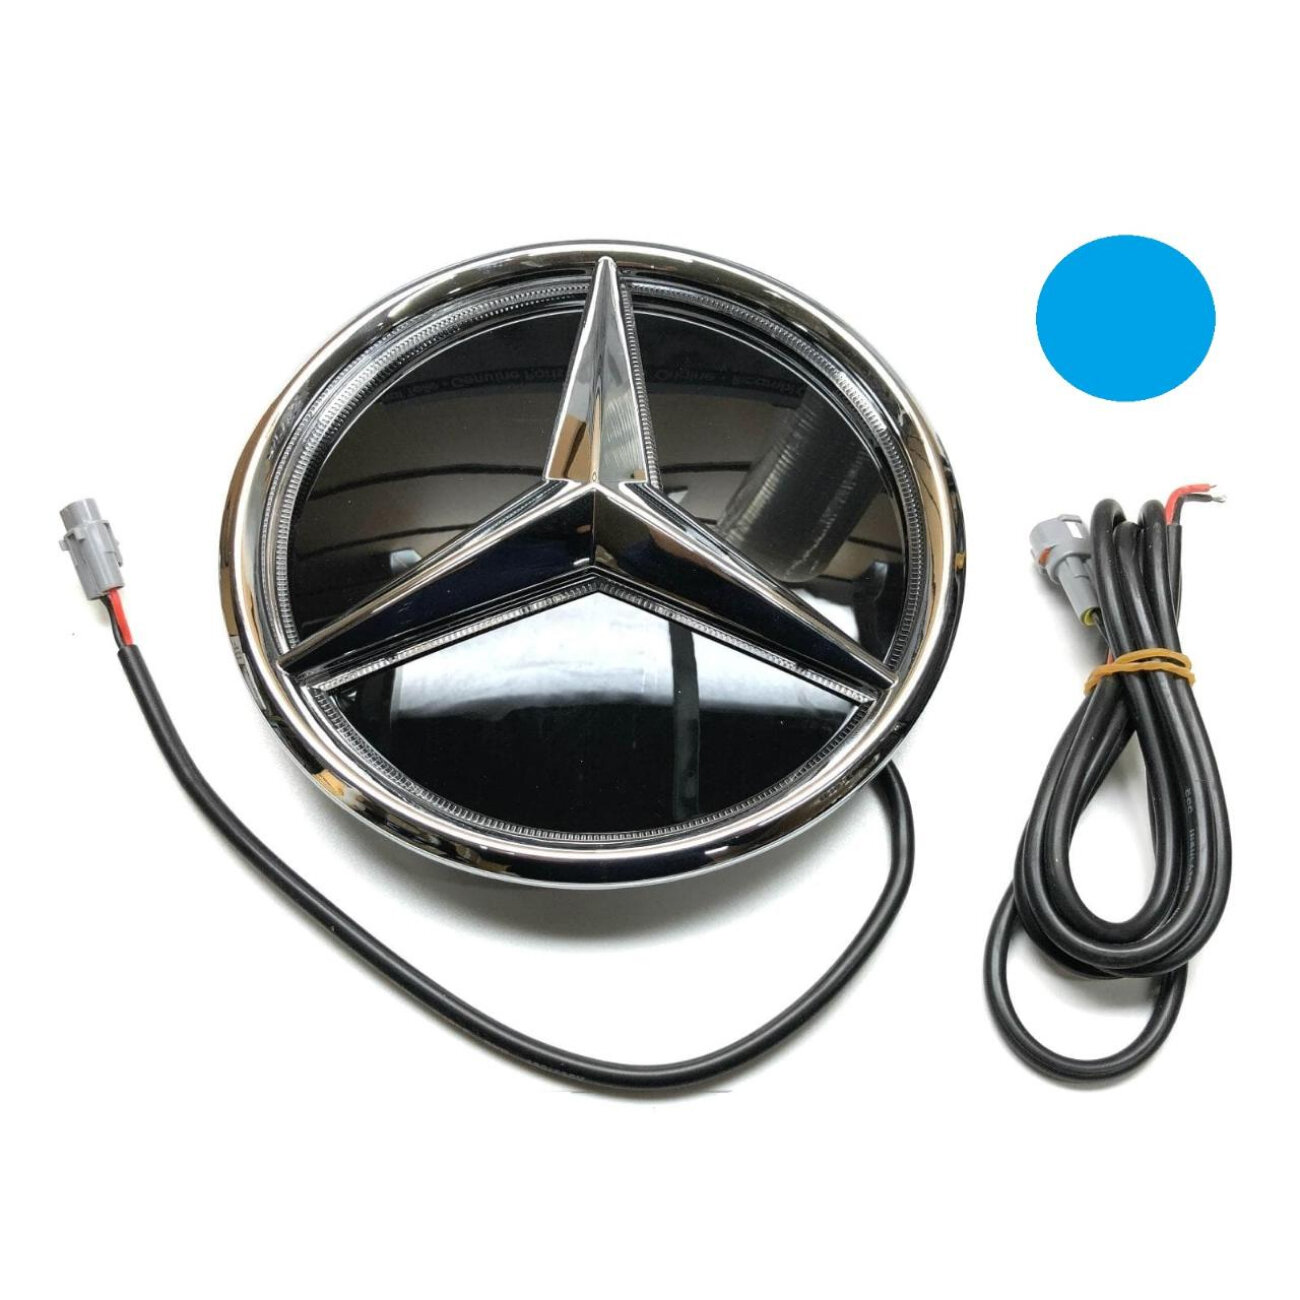 Эмблема звезда на решетку радиатора Mercedes с подсветкой 3D (синий цвет)